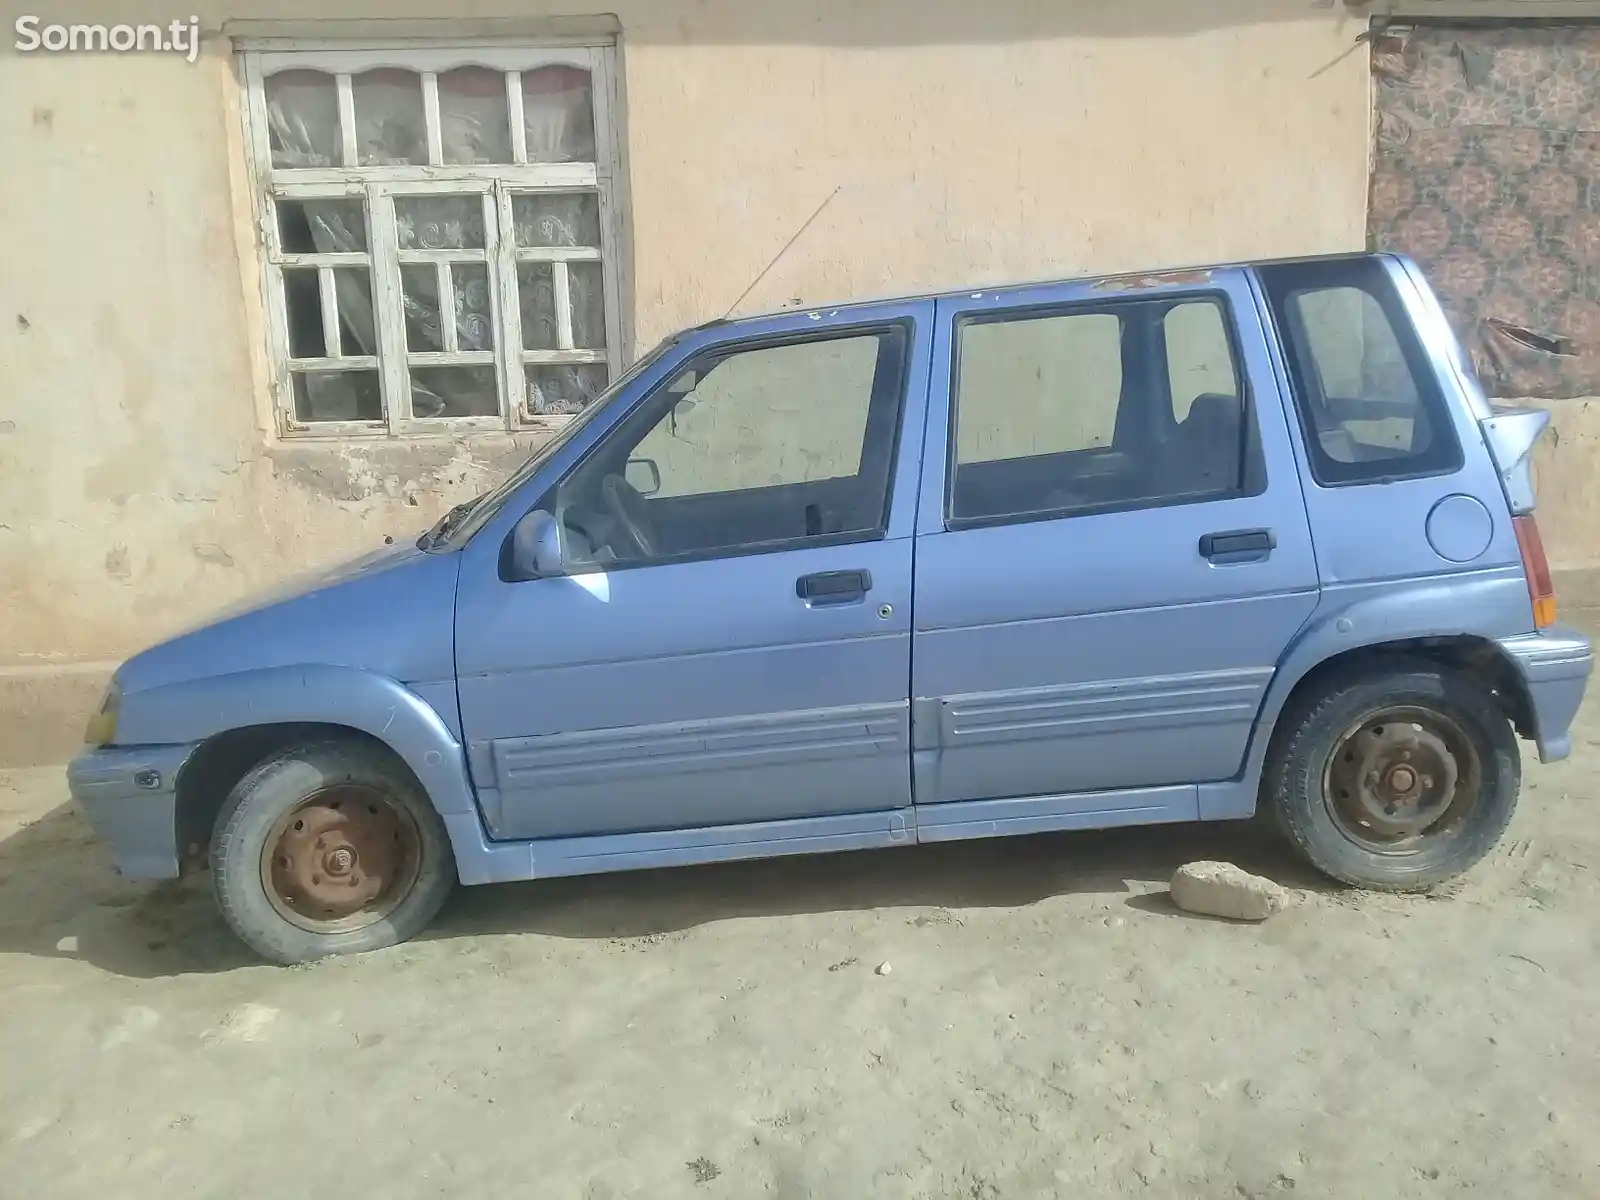 Daewoo Tico, 1997-2